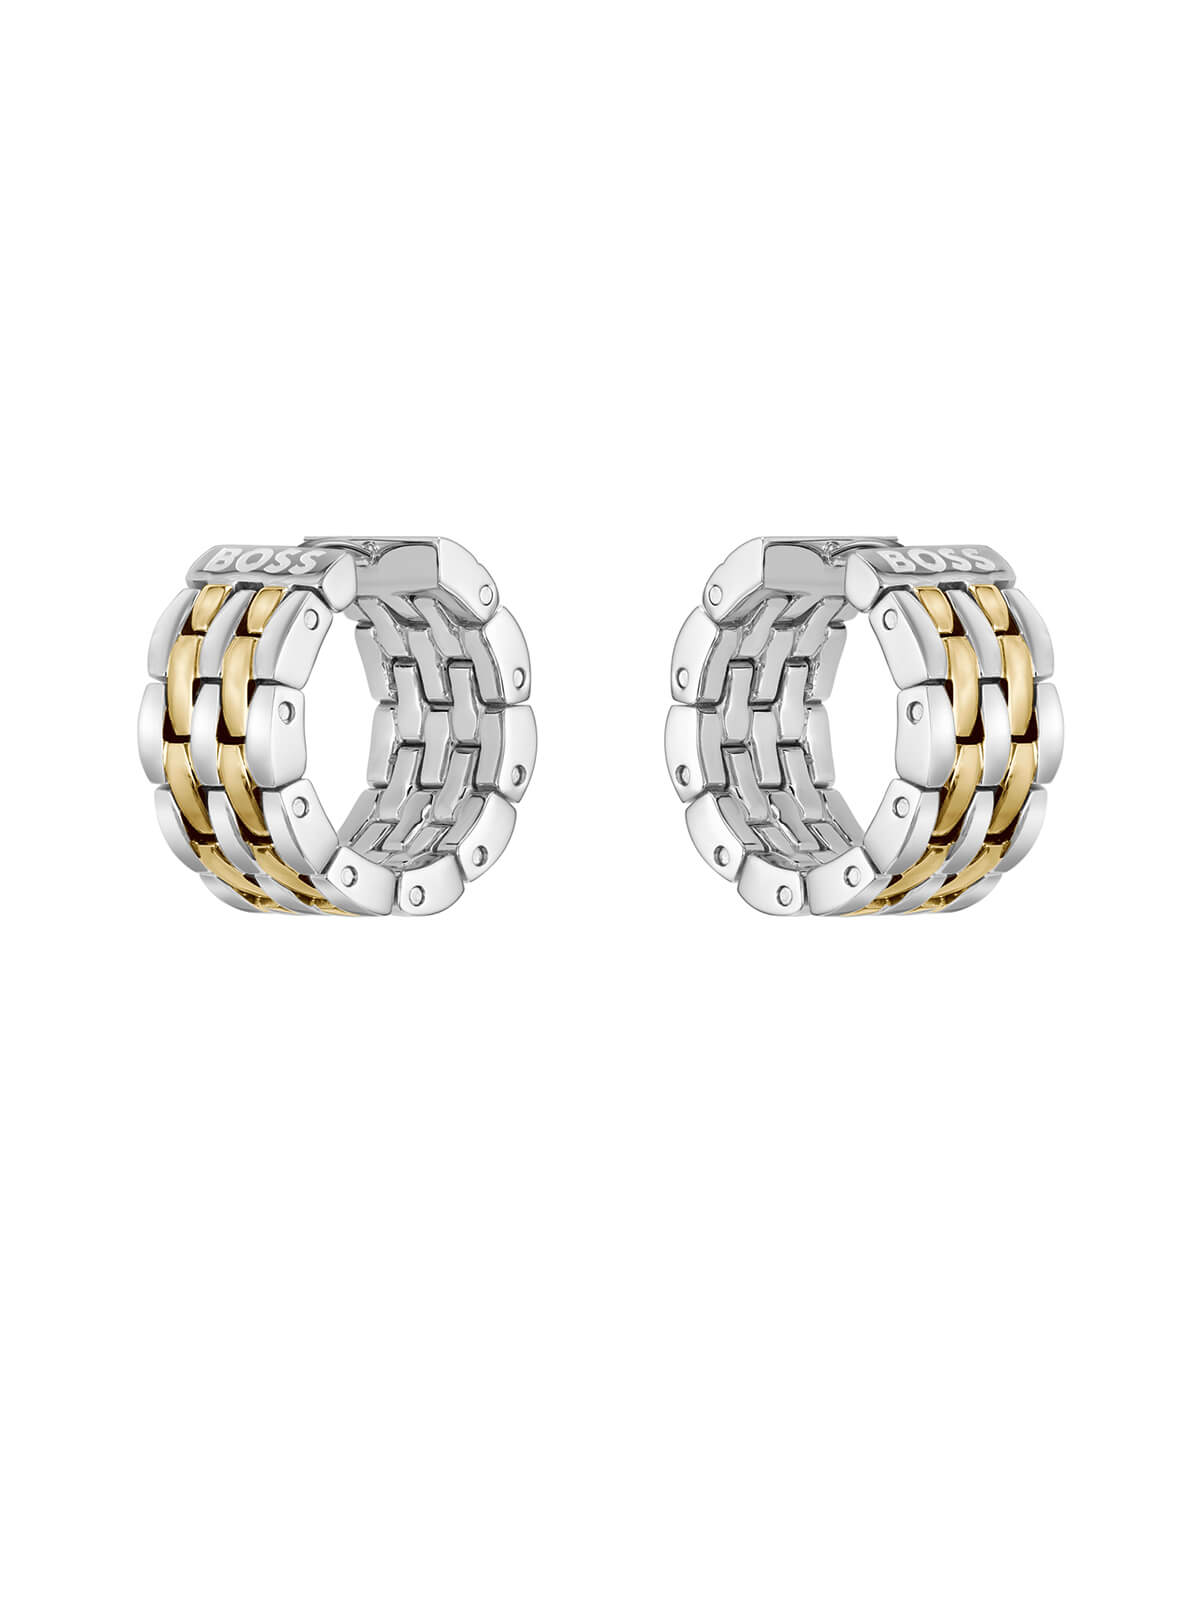 BOSS Isla Hoop Earrings in Stainless Steel & Gold Plating 1580531